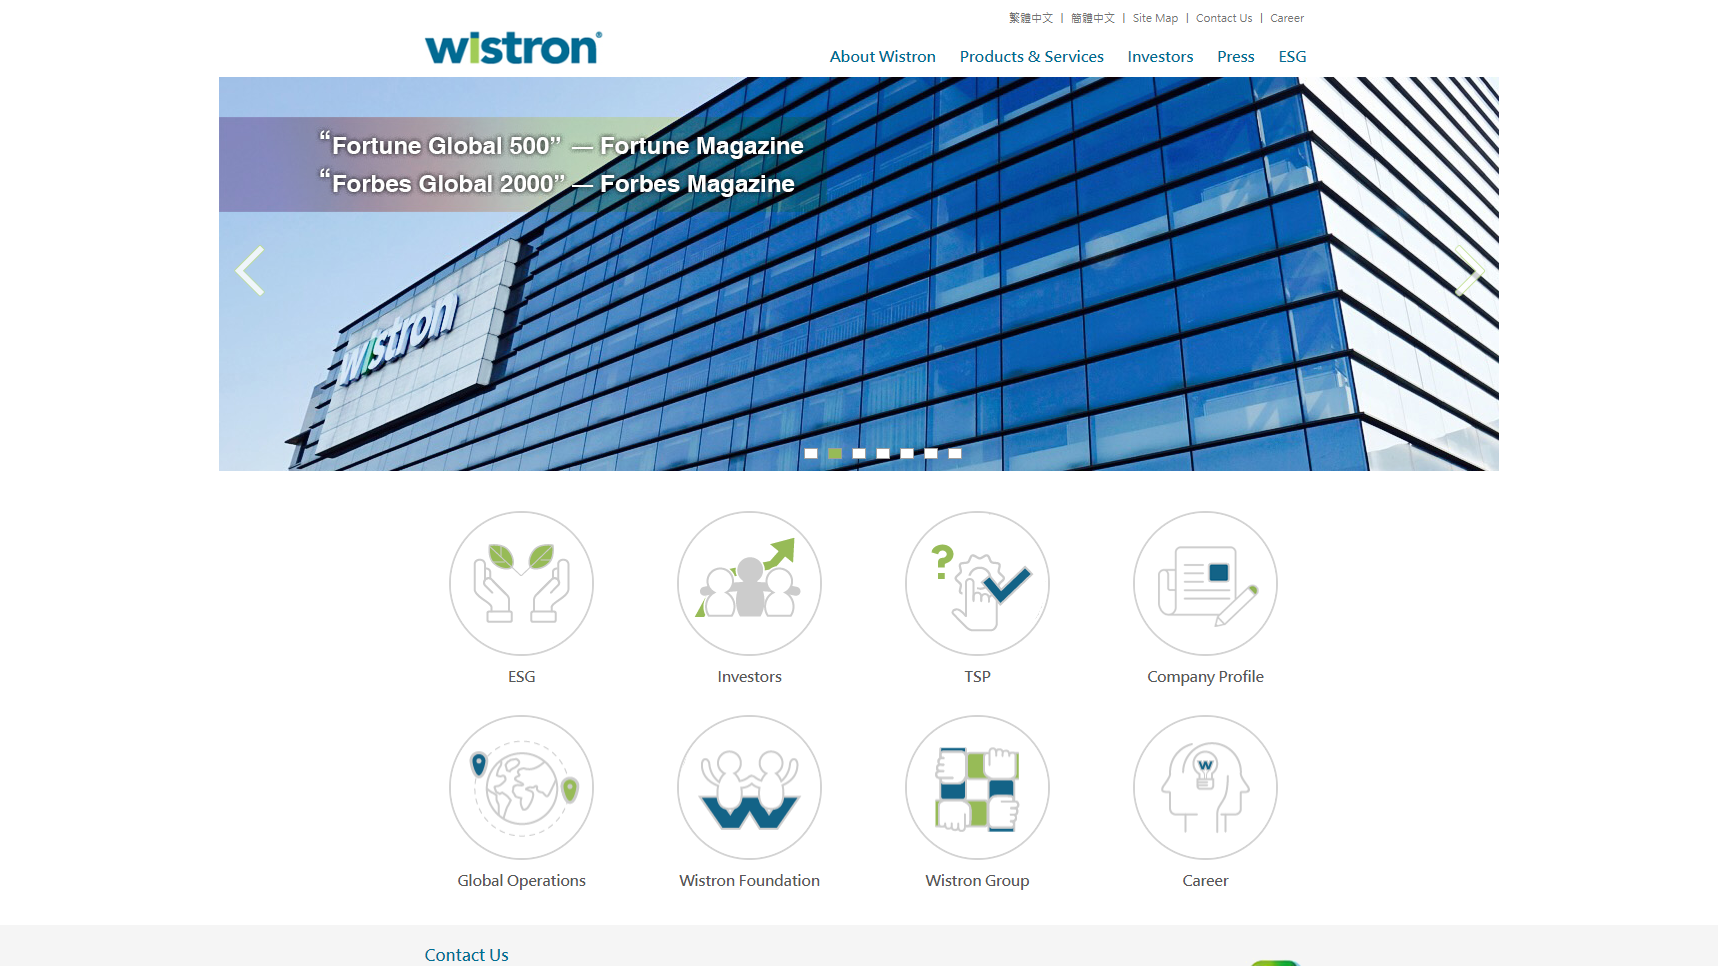 Wistron - Tablet PC Manufacturer